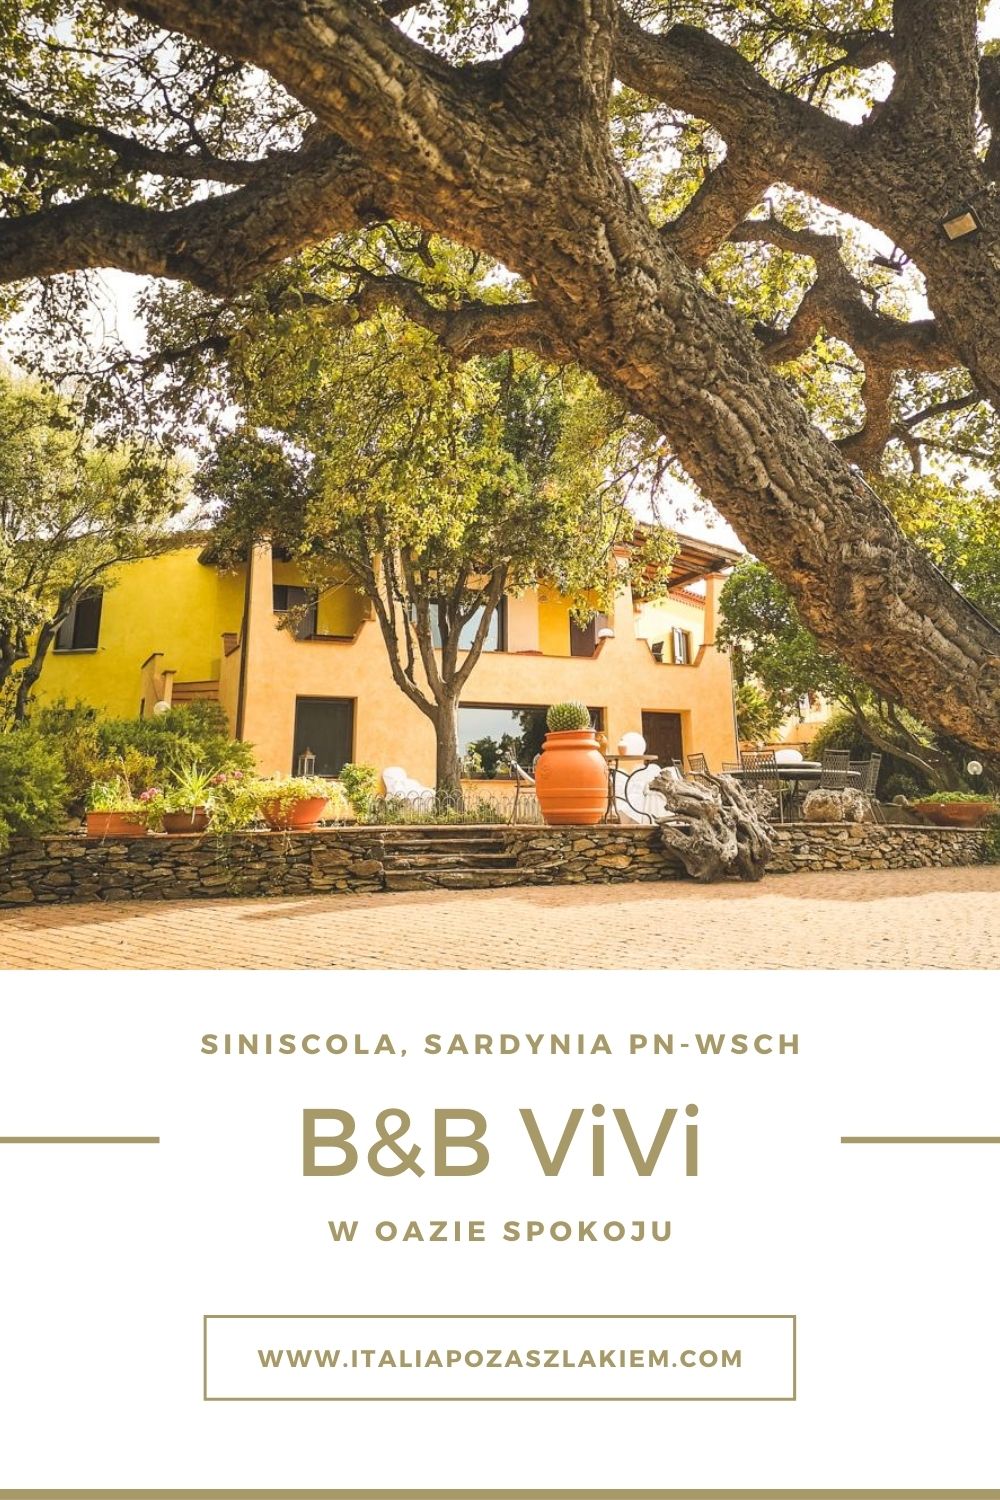 B&B ViVi, Siniscola, Sardynia